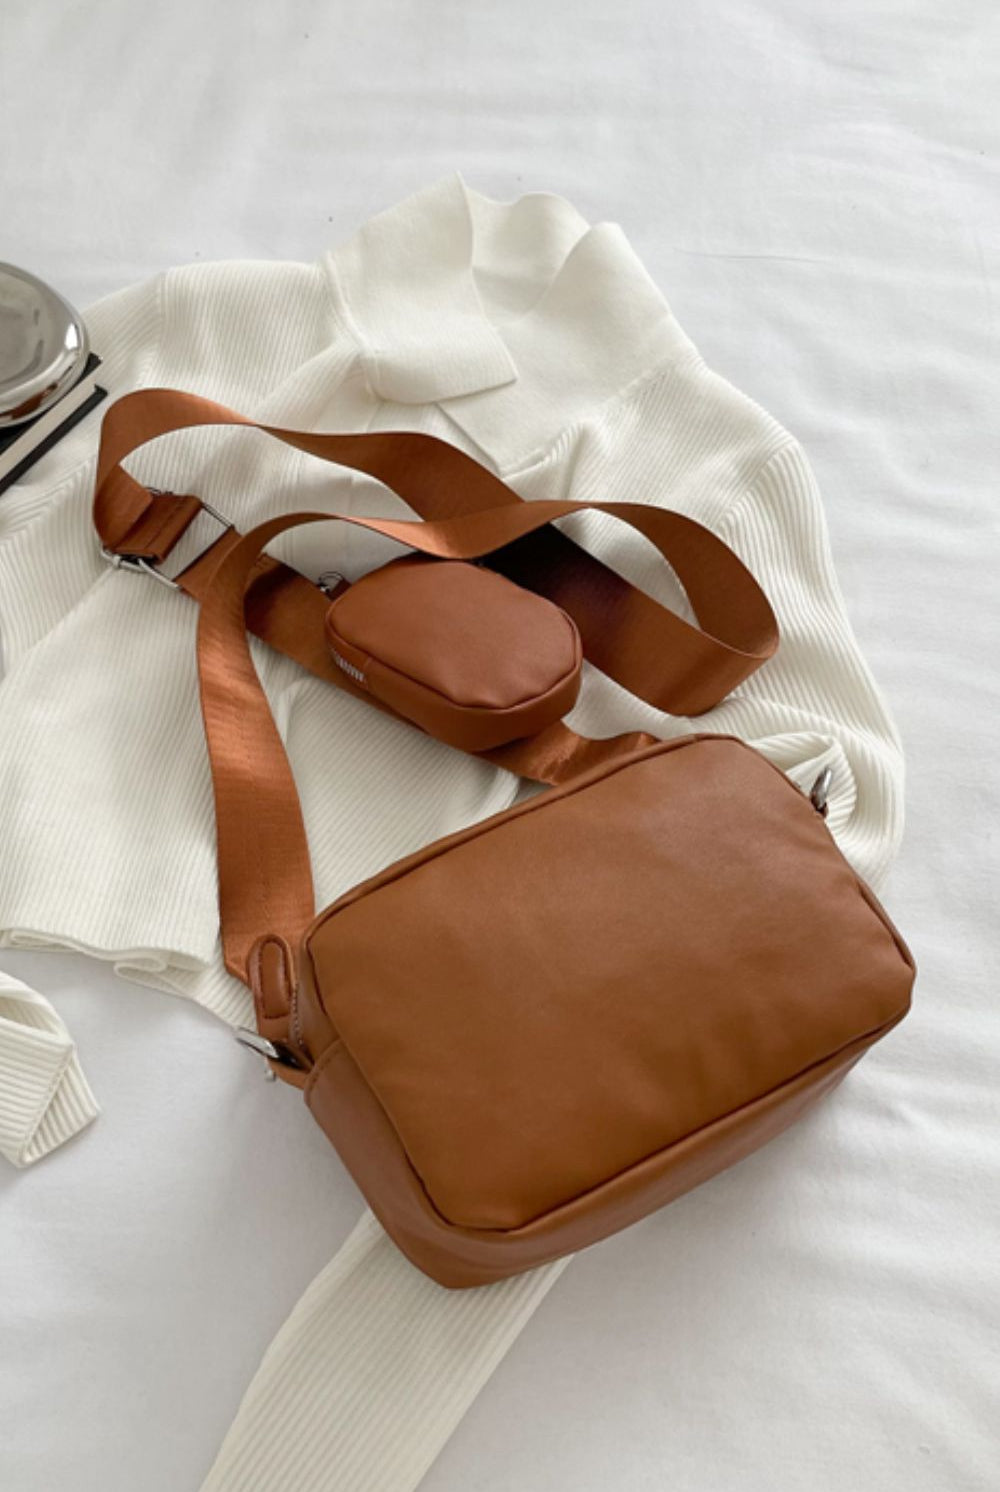 Light Gray Adored PU Leather Shoulder Bag with Small Purse Handbags